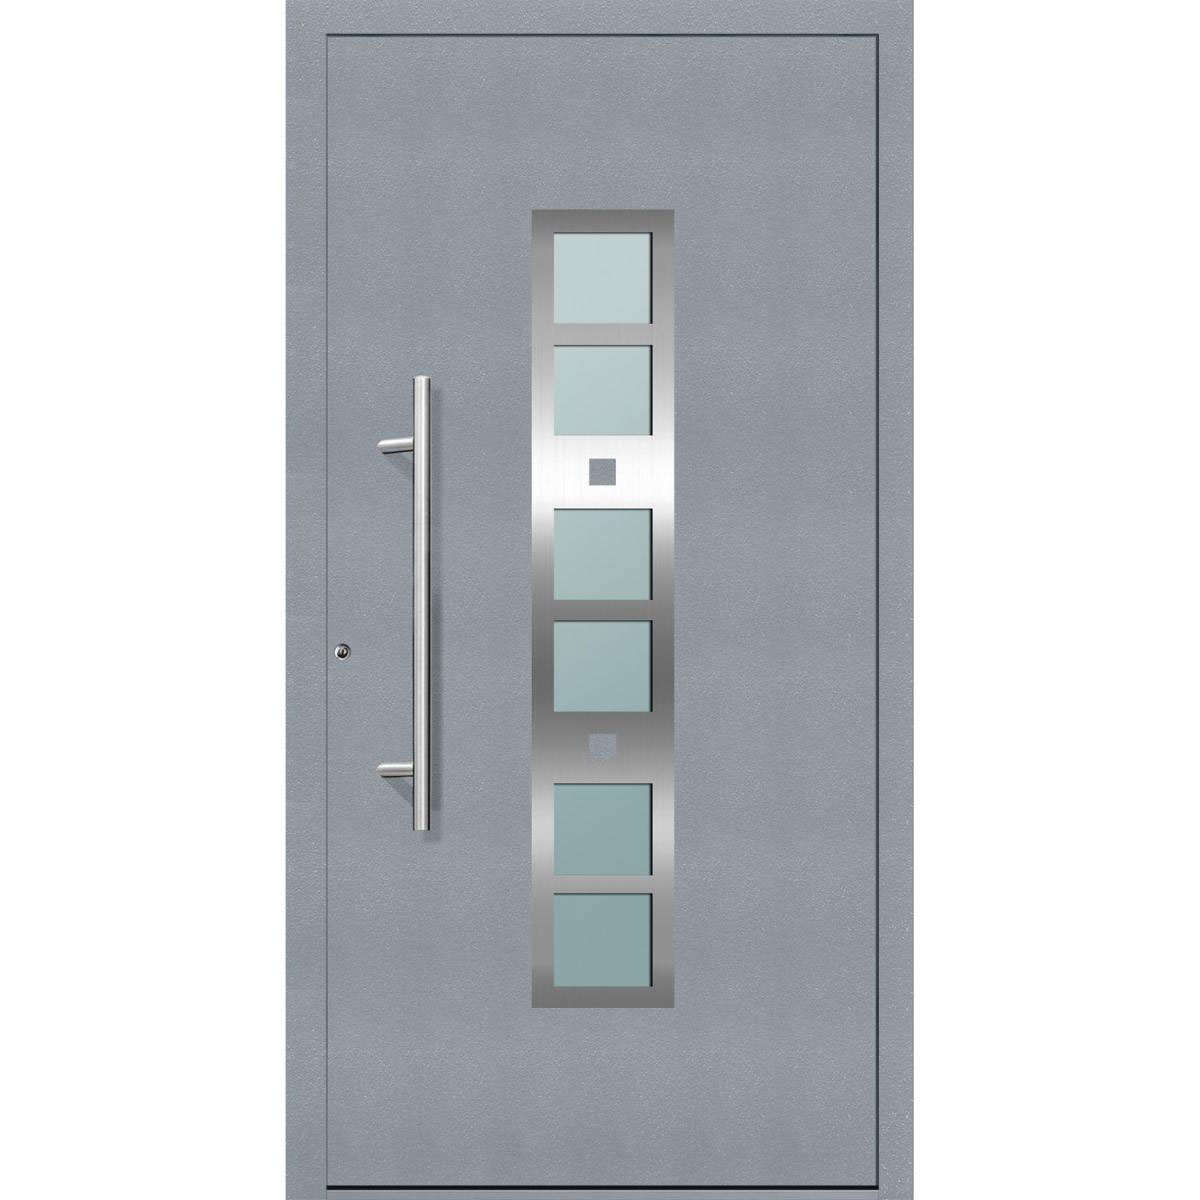 Aluminium Sicherheits-Haustür „Pisa Exklusiv“, 75mm, grau, 100x210 cm, Anschlag links, inkl. Griffset